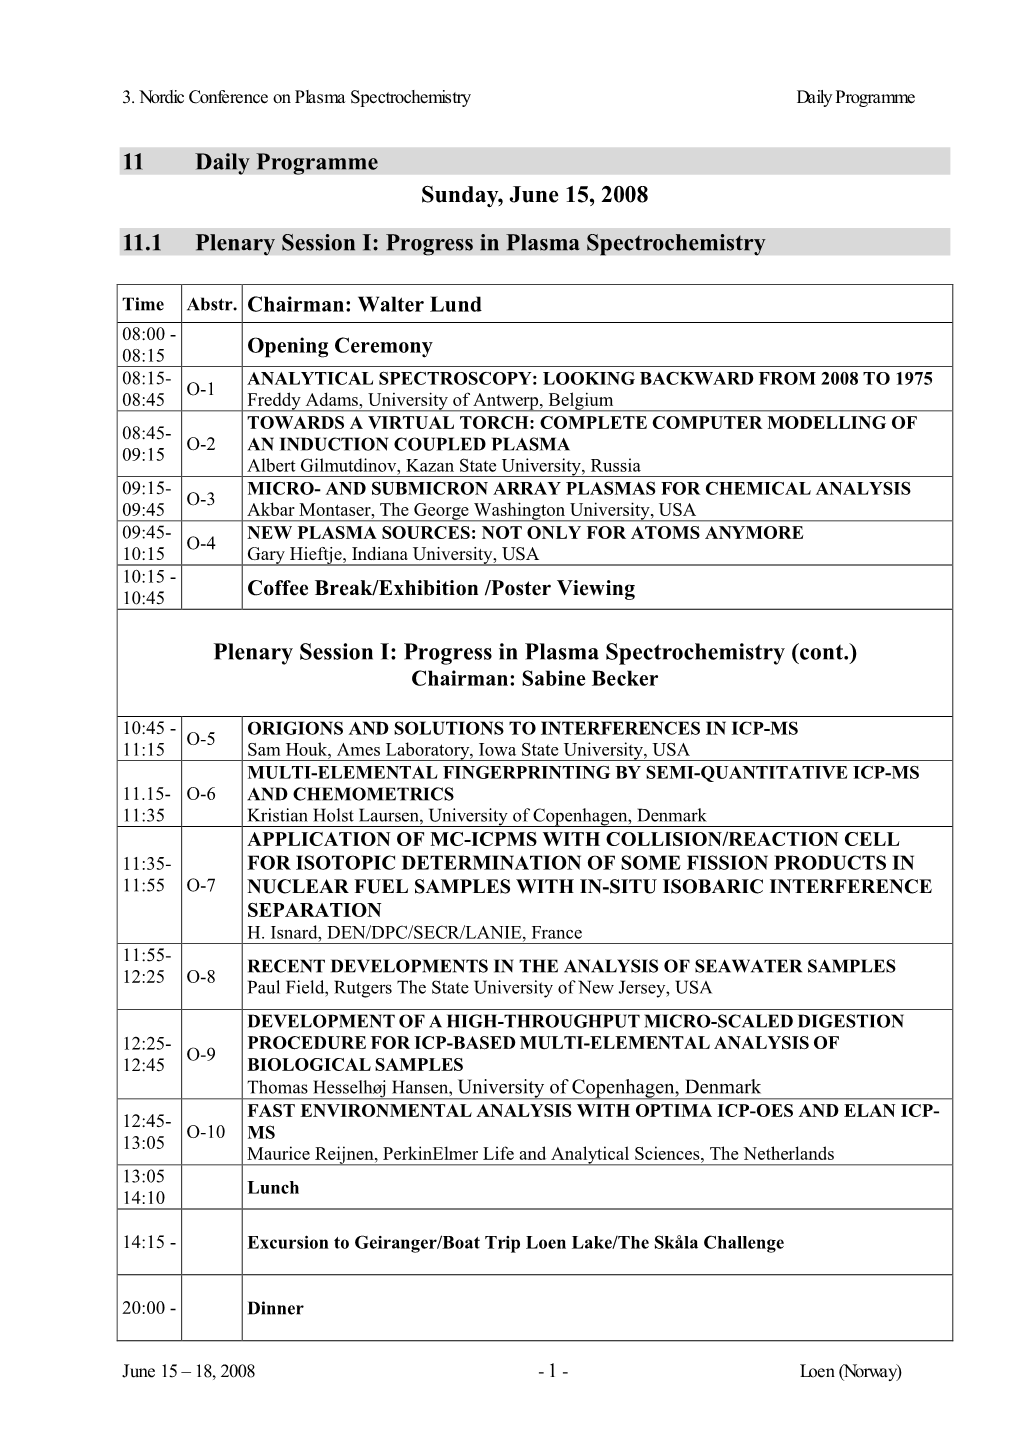 Progress in Plasma Spectrochemistry Plenary Session I